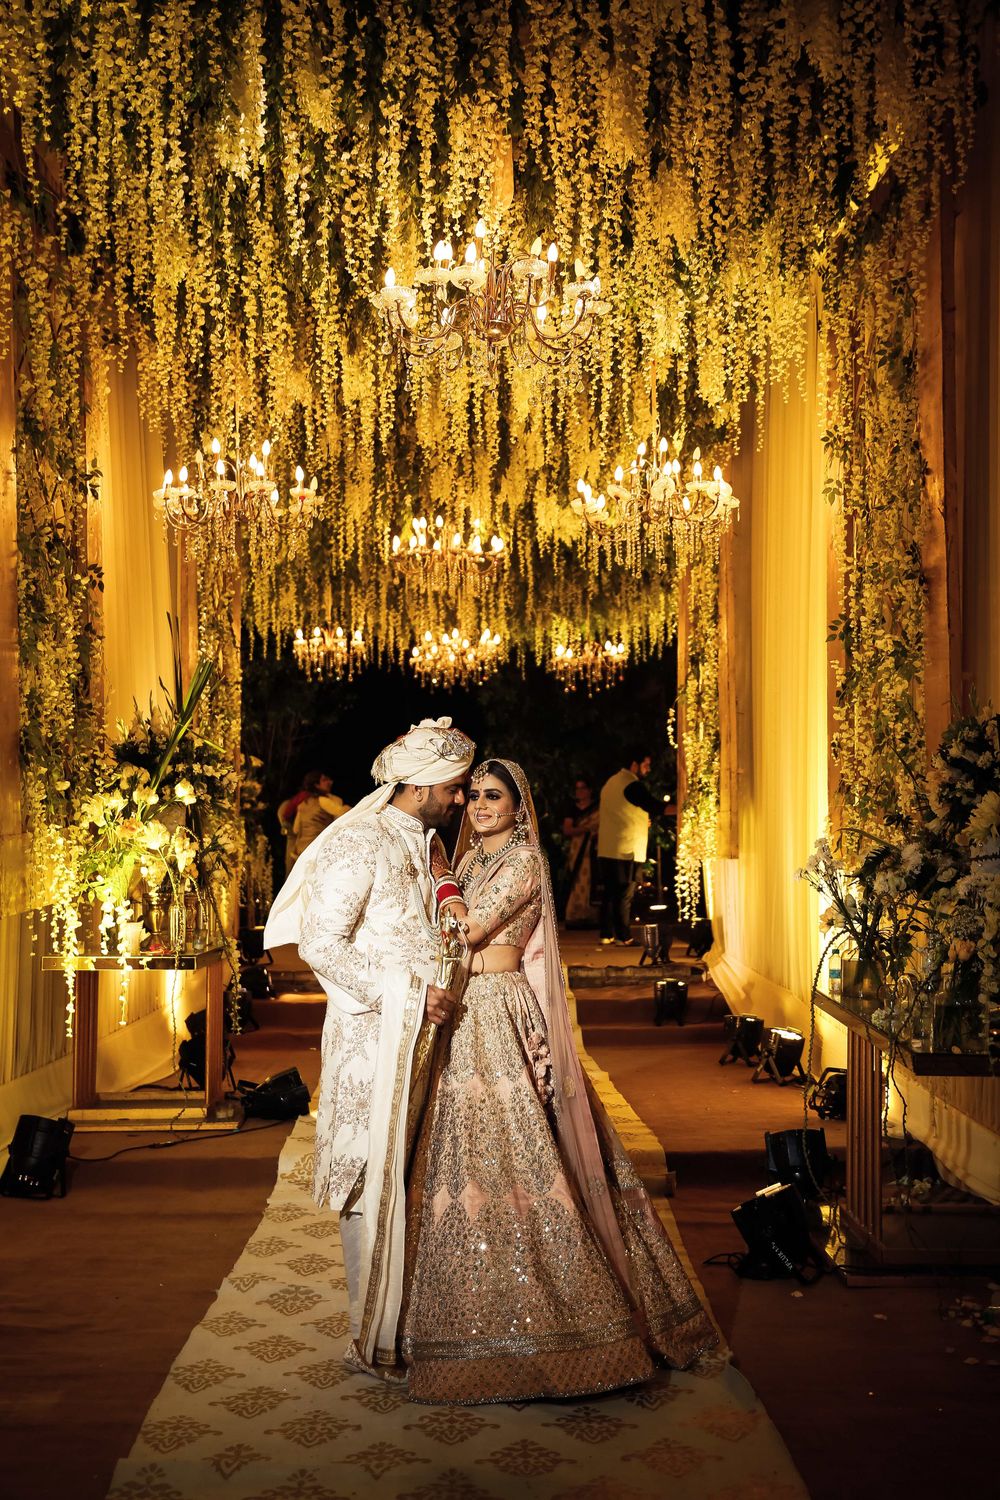 Photo of couple portrait against grand wedding decor